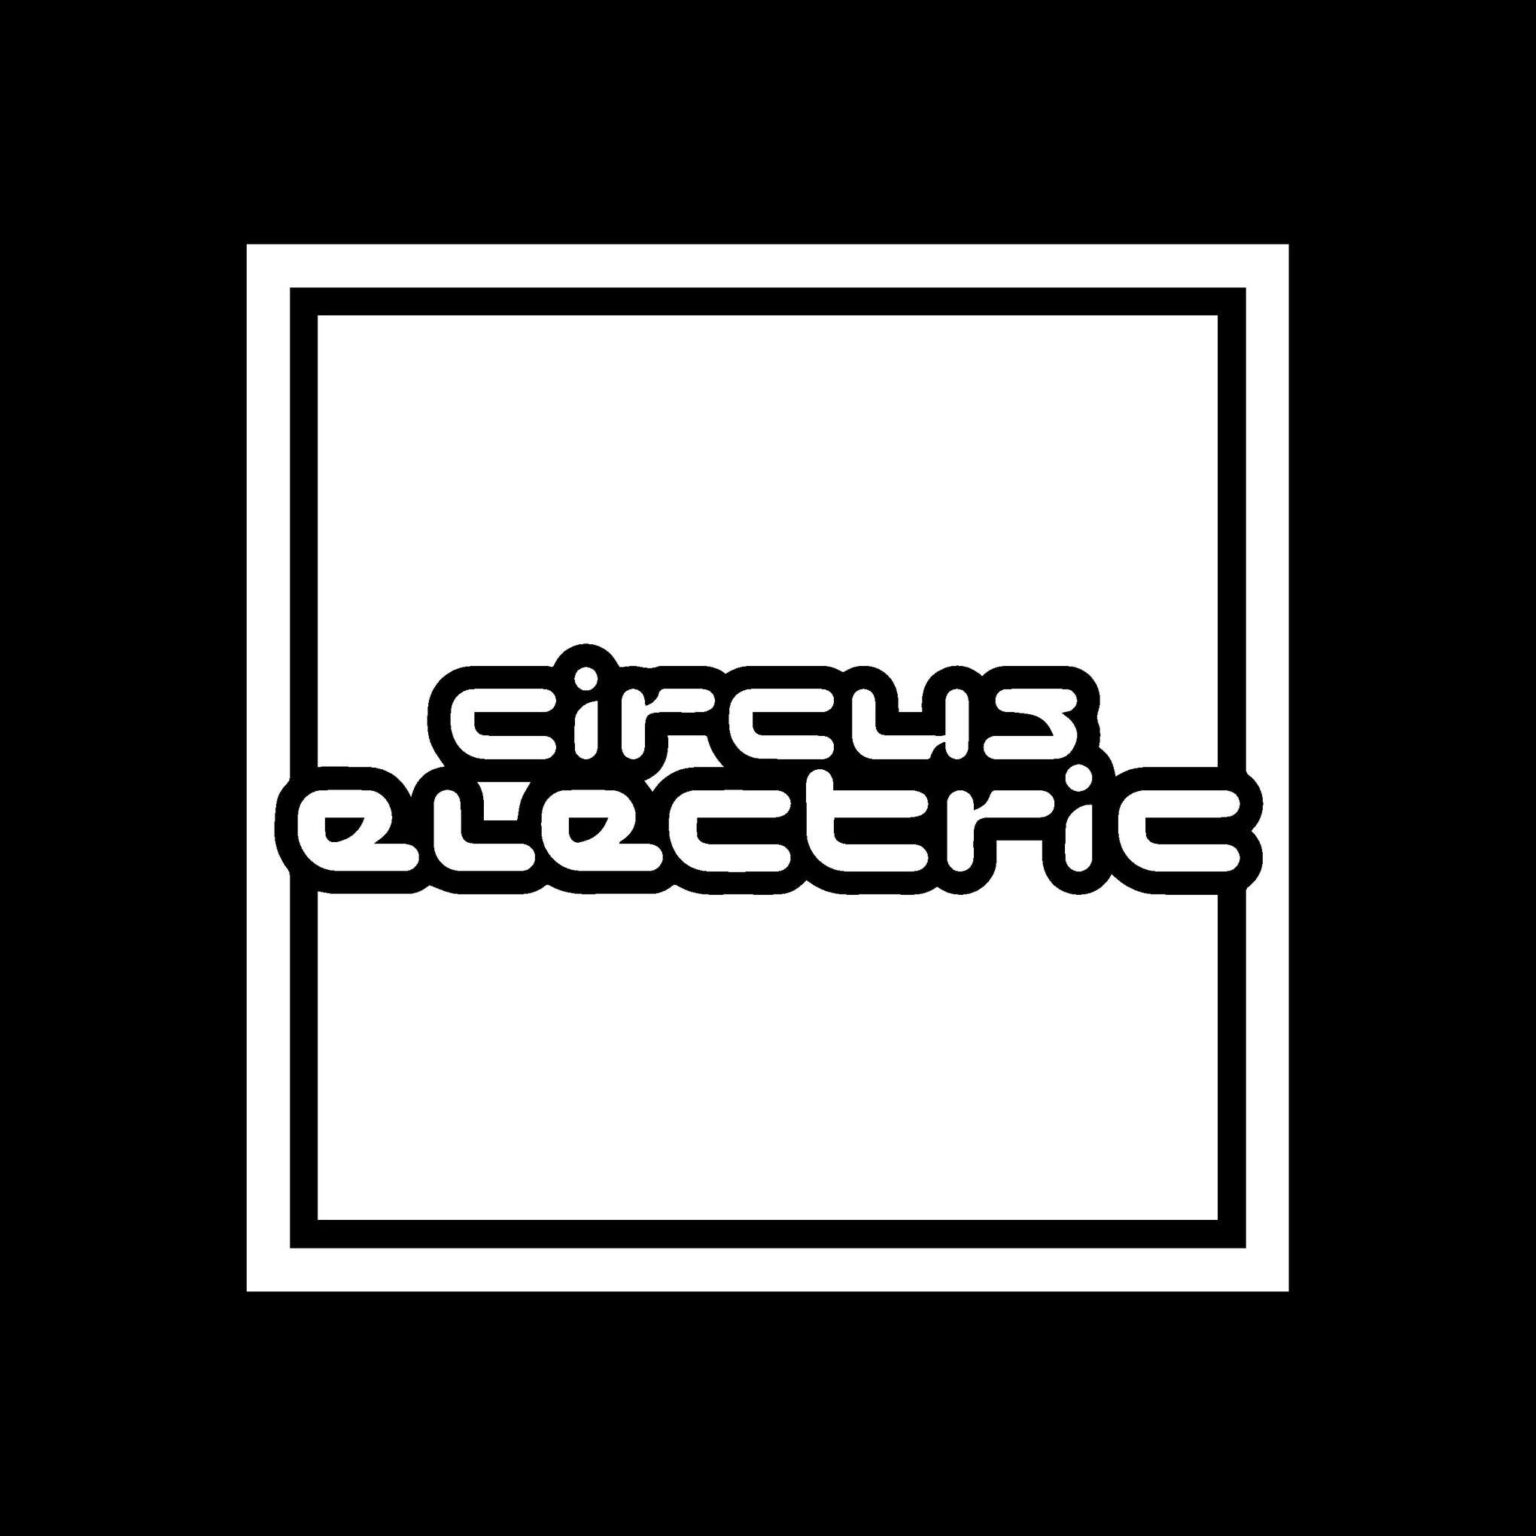 circus electric